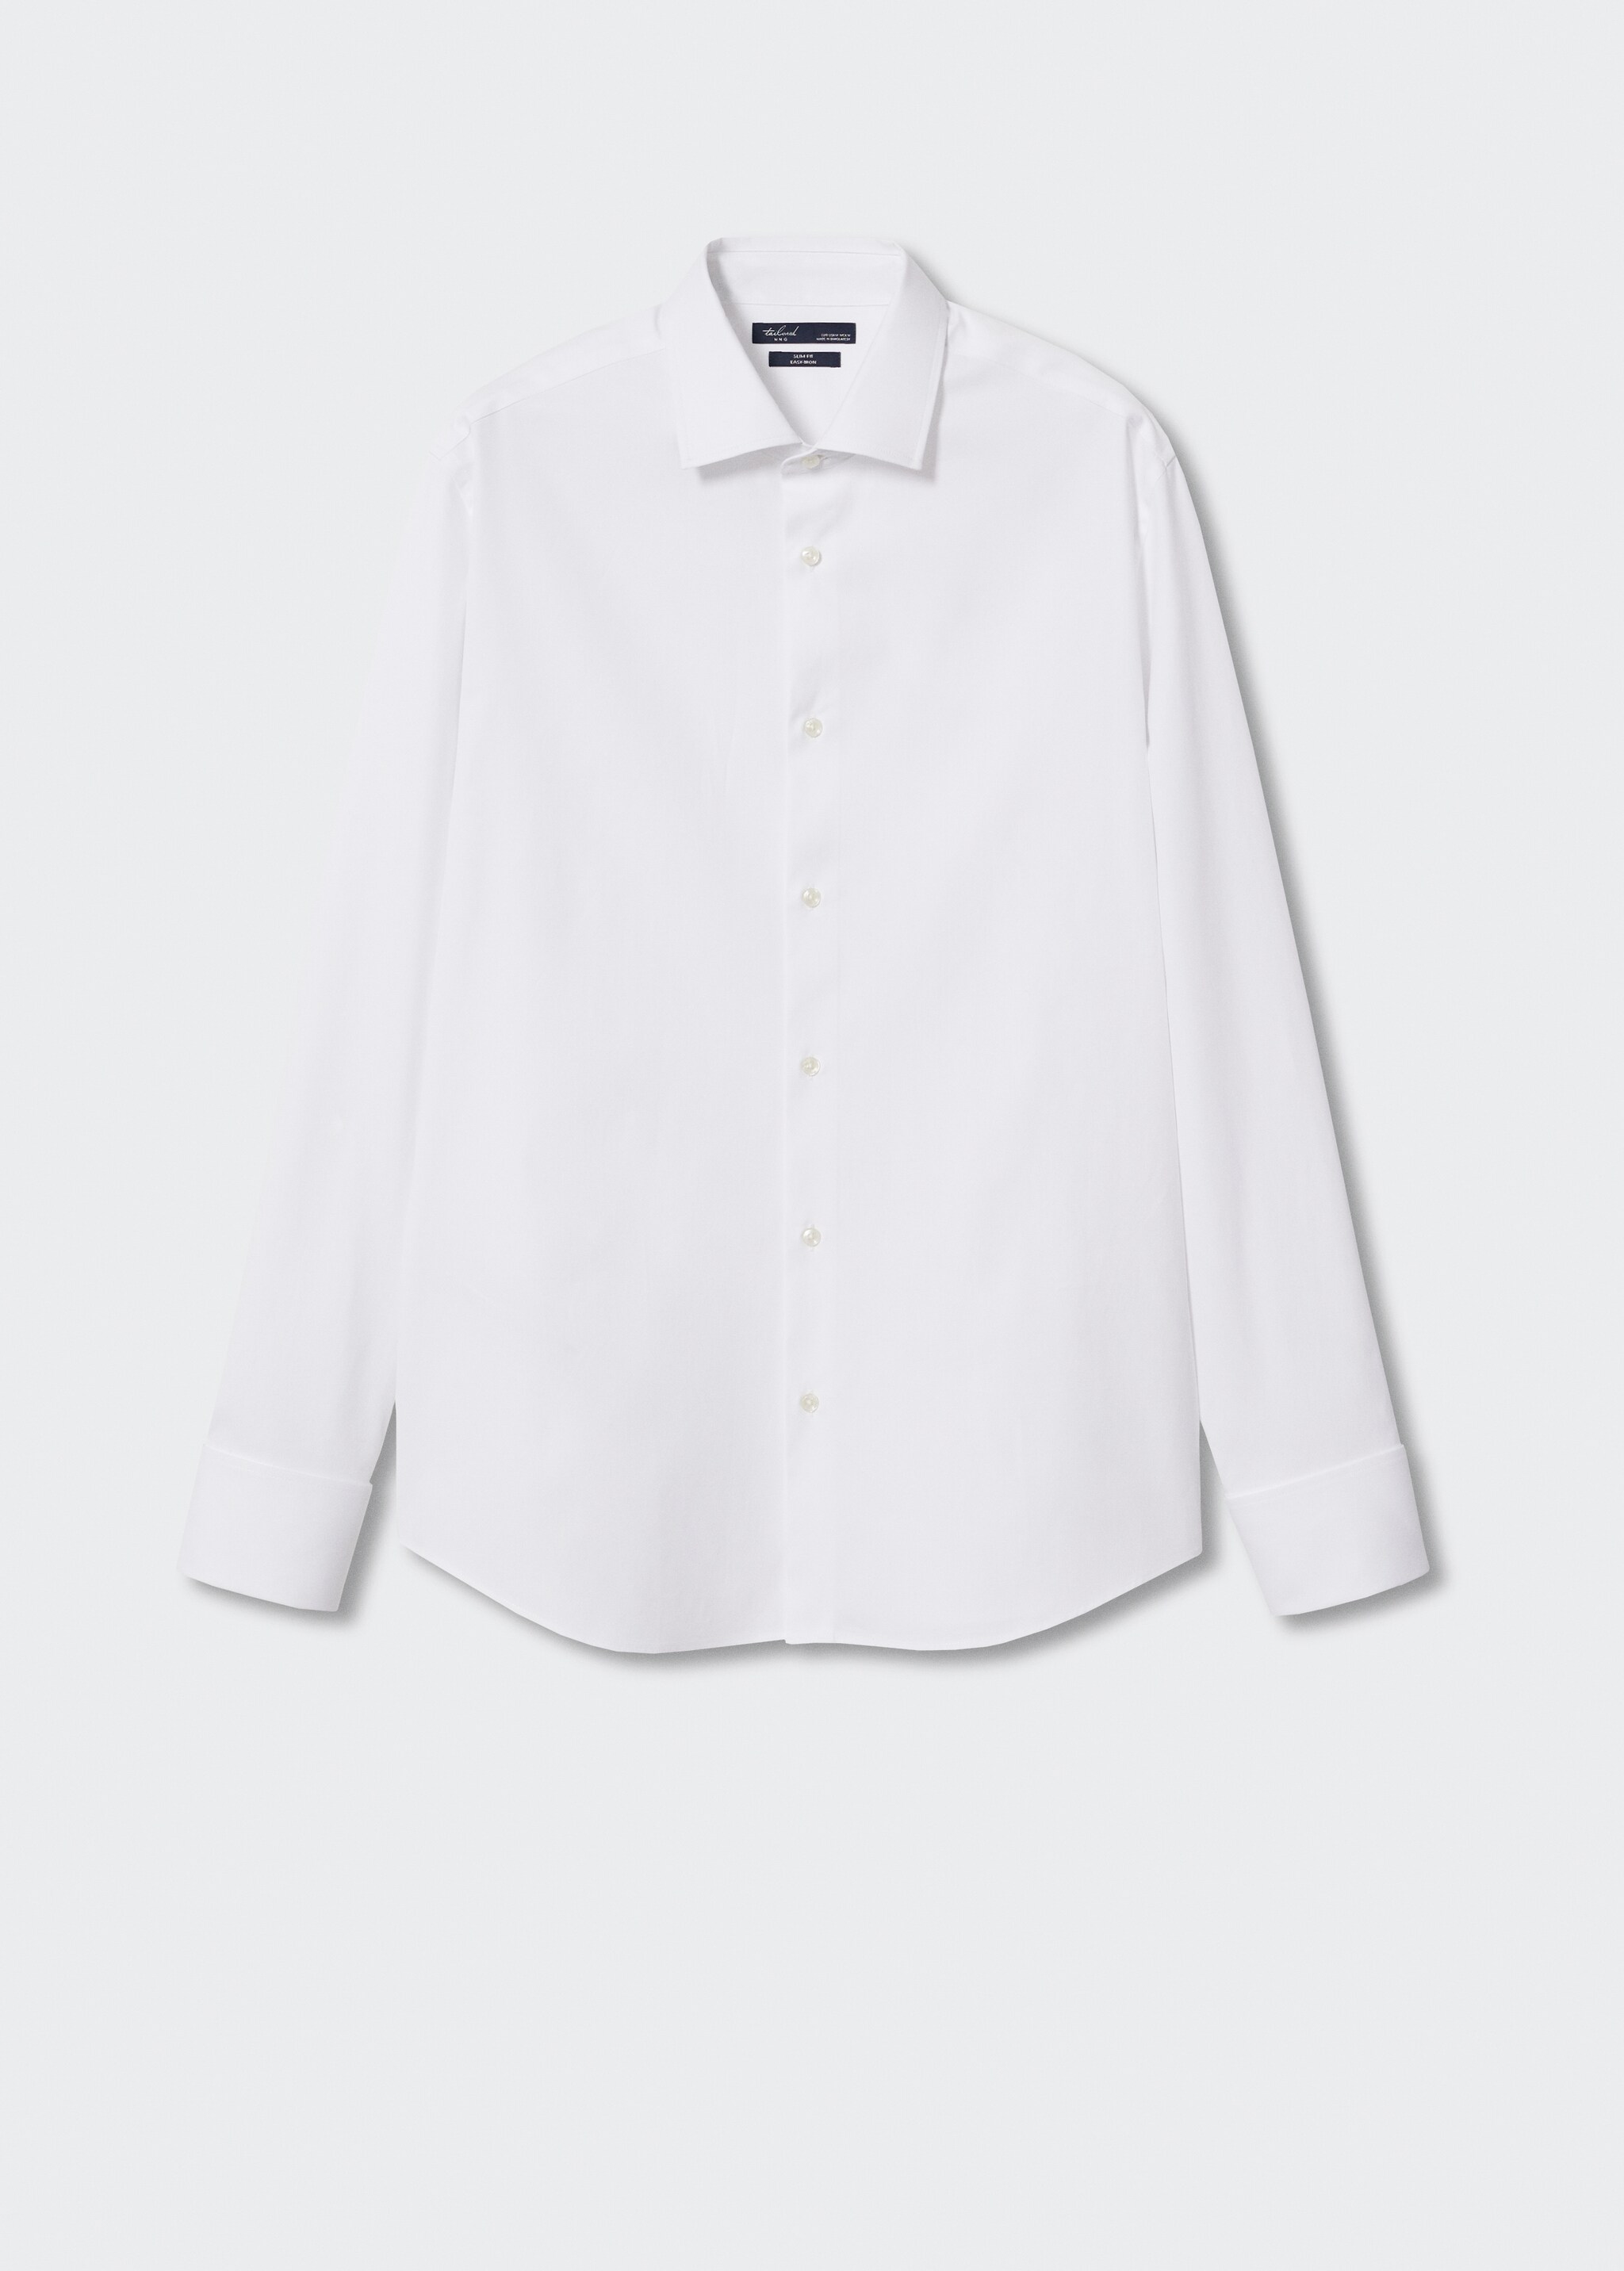 Slim fit cotton suit shirt - Article without model